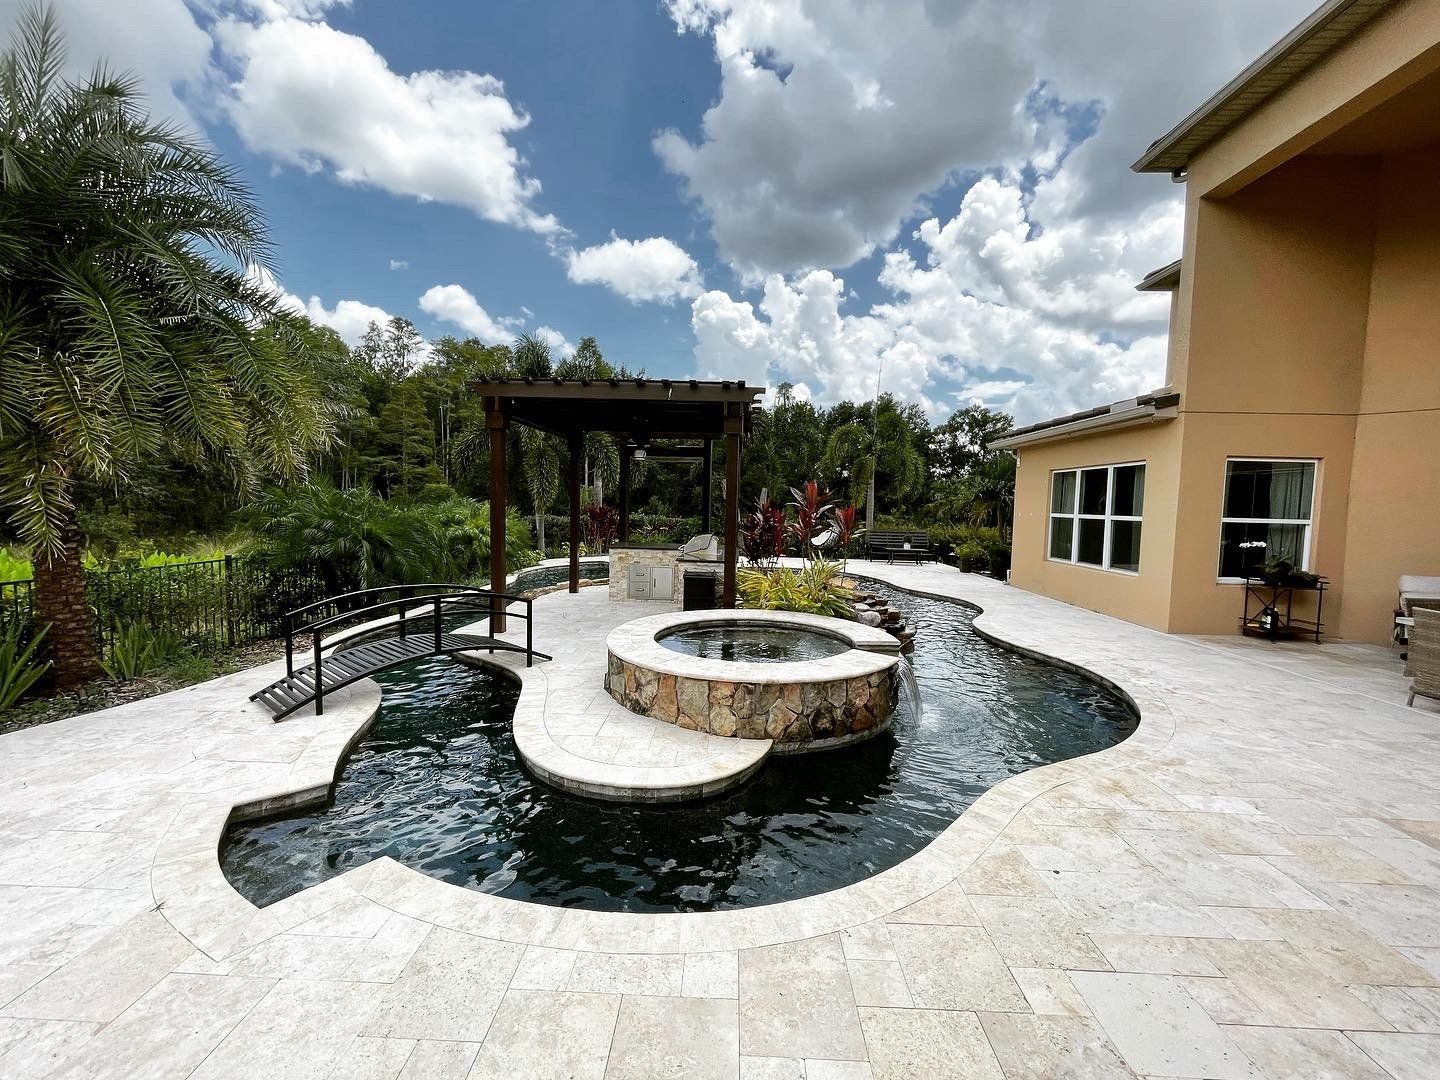 Clean Pool | Wesley Chapel, FL | Calta's Clear Pools